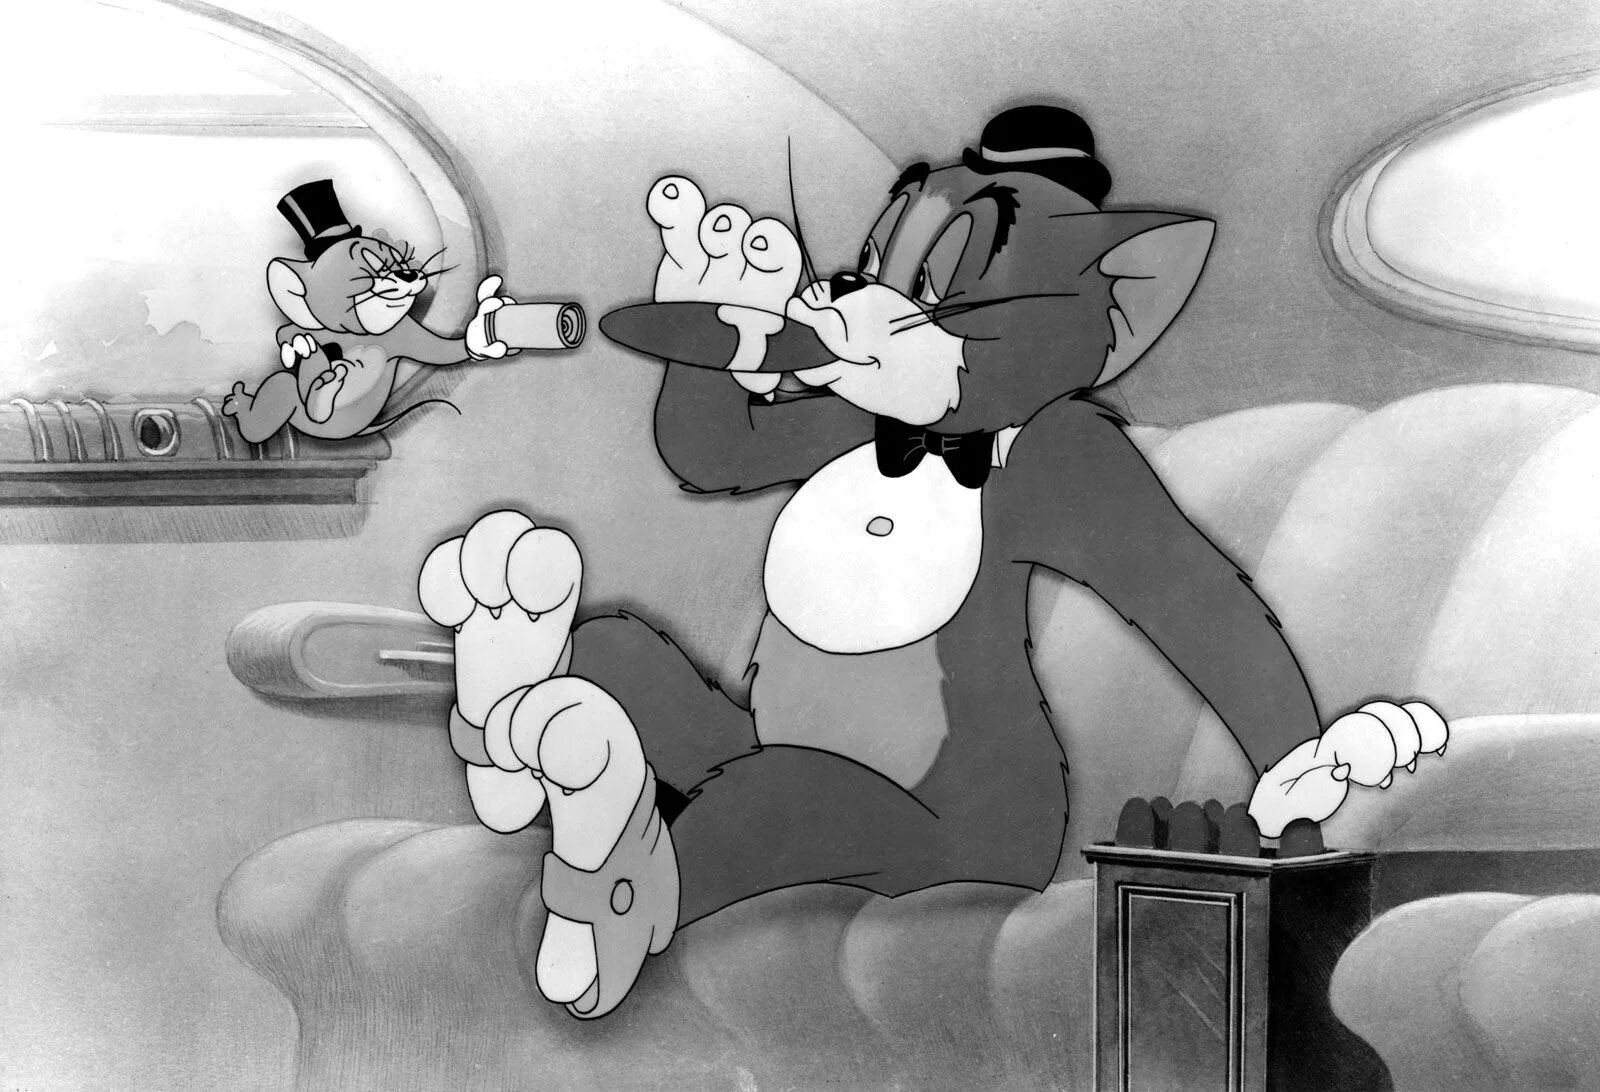 Tom and Jerry 1960. Tom and Jerry 1930. Том и Джерри том с сигарой. Том с сигаретой том и Джерри. 3 х лет на том